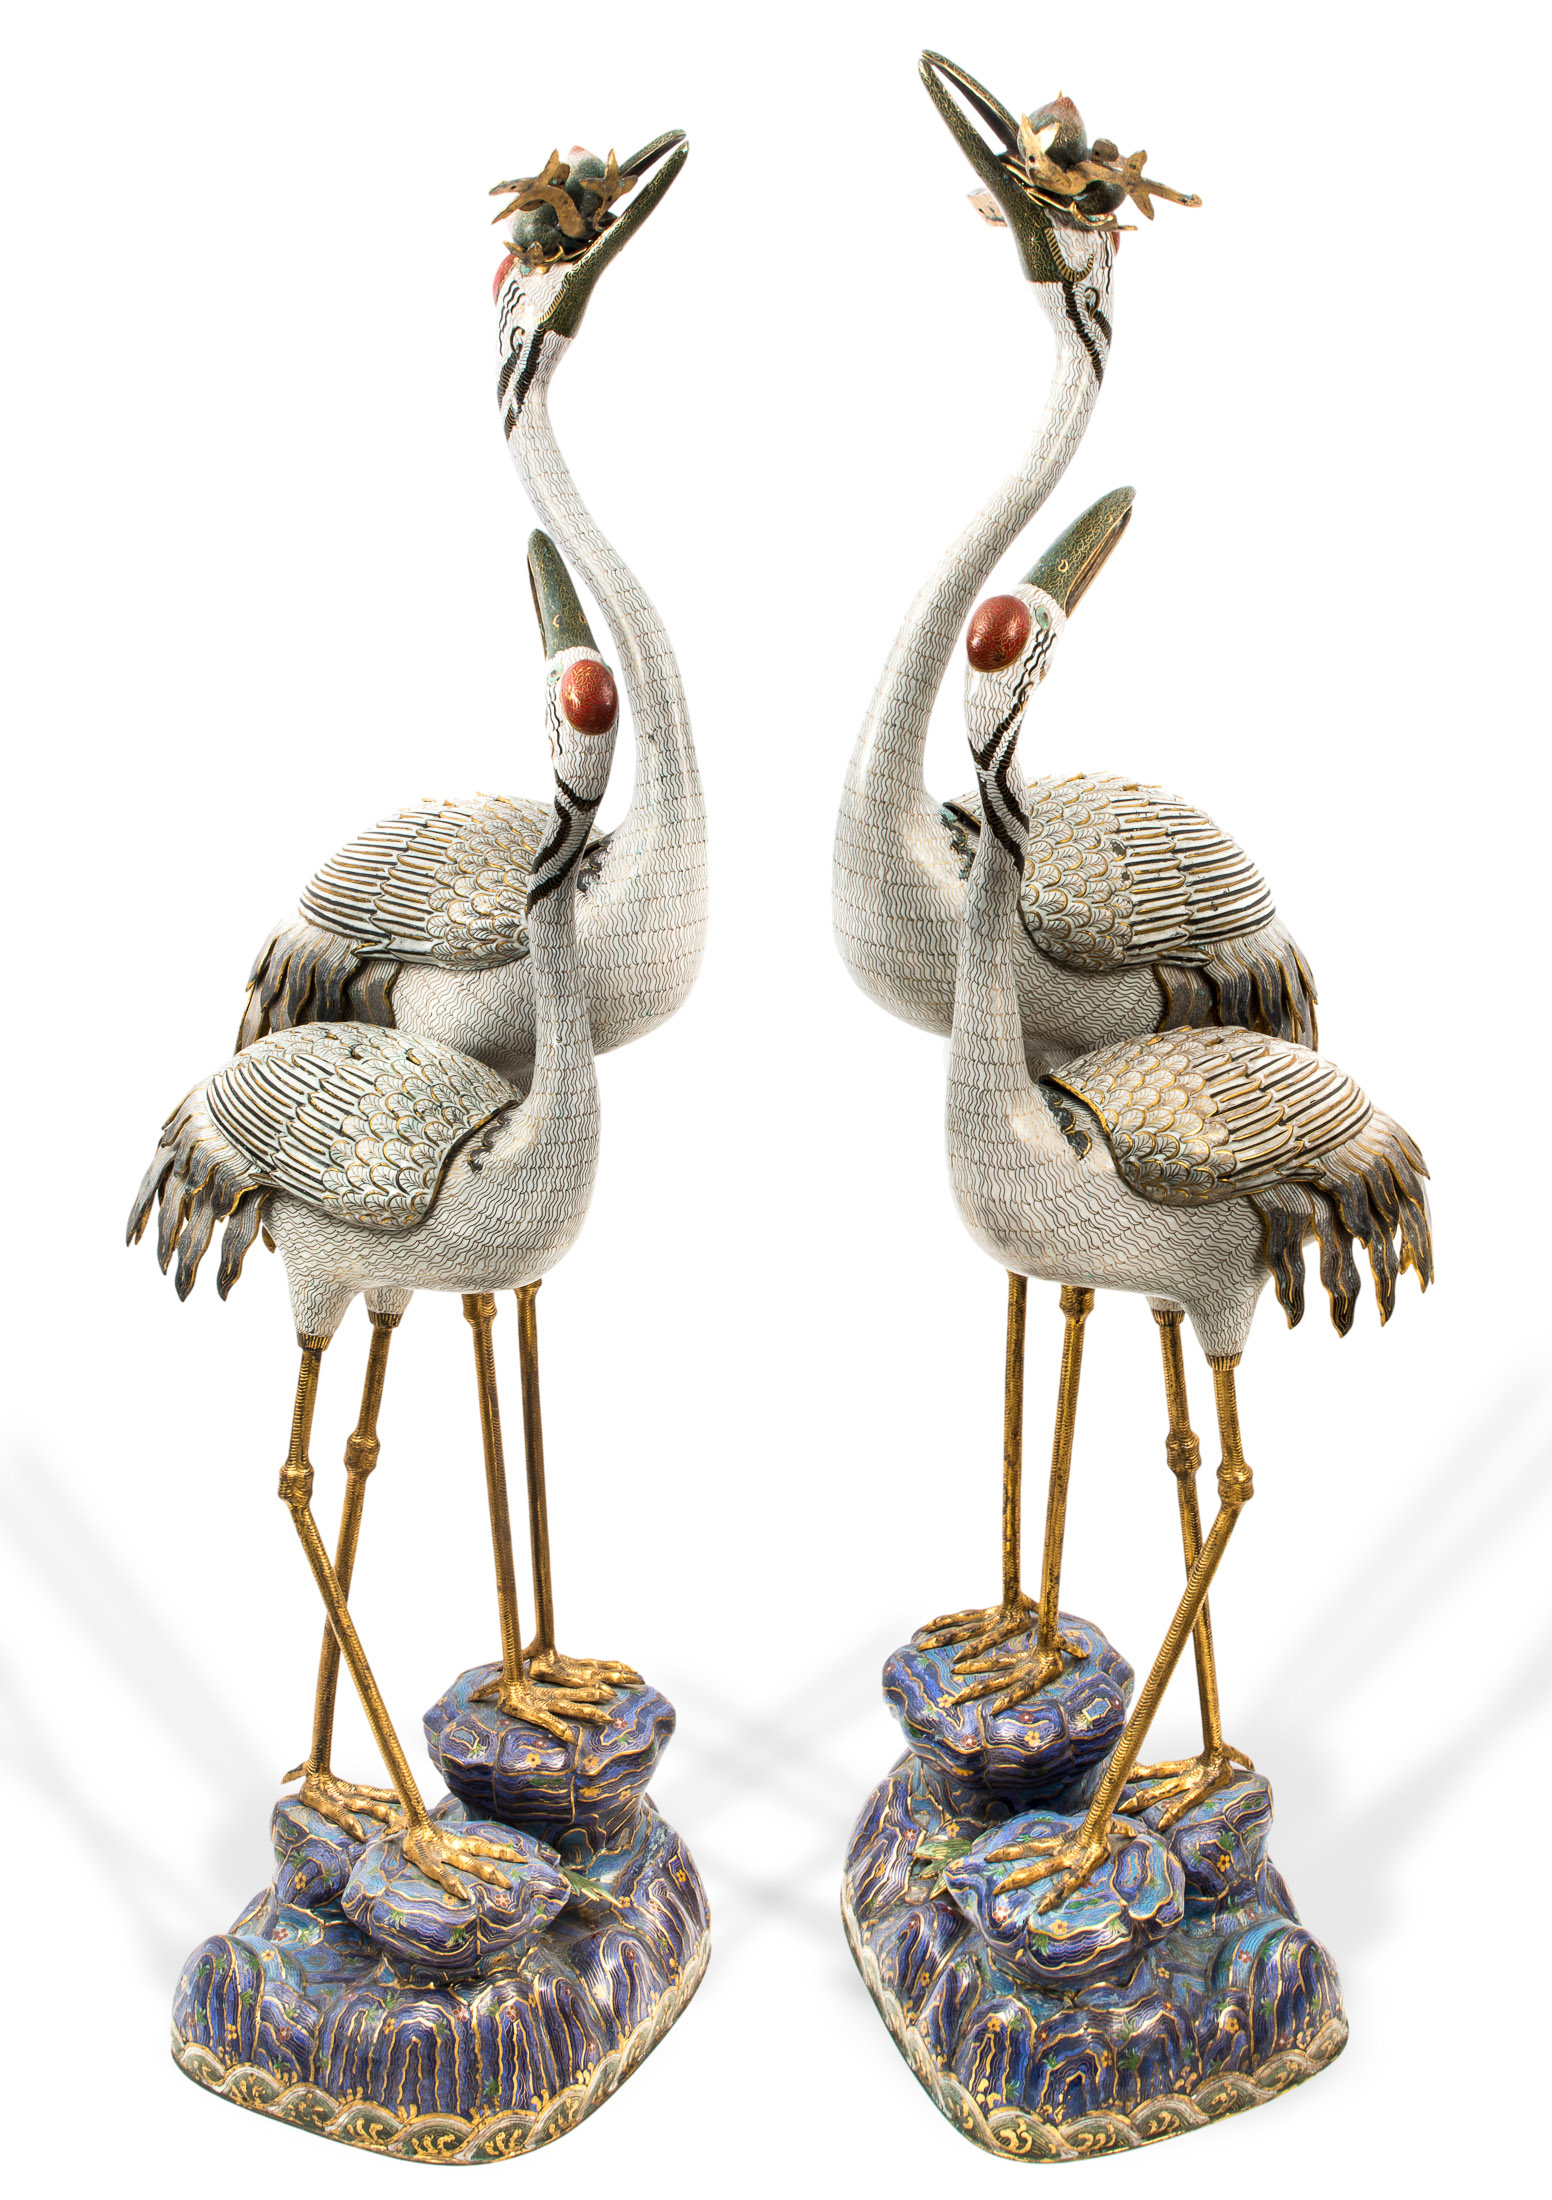 Enamel cranes sell for £124,000 at Dreweatts &#038; Bloomsbury